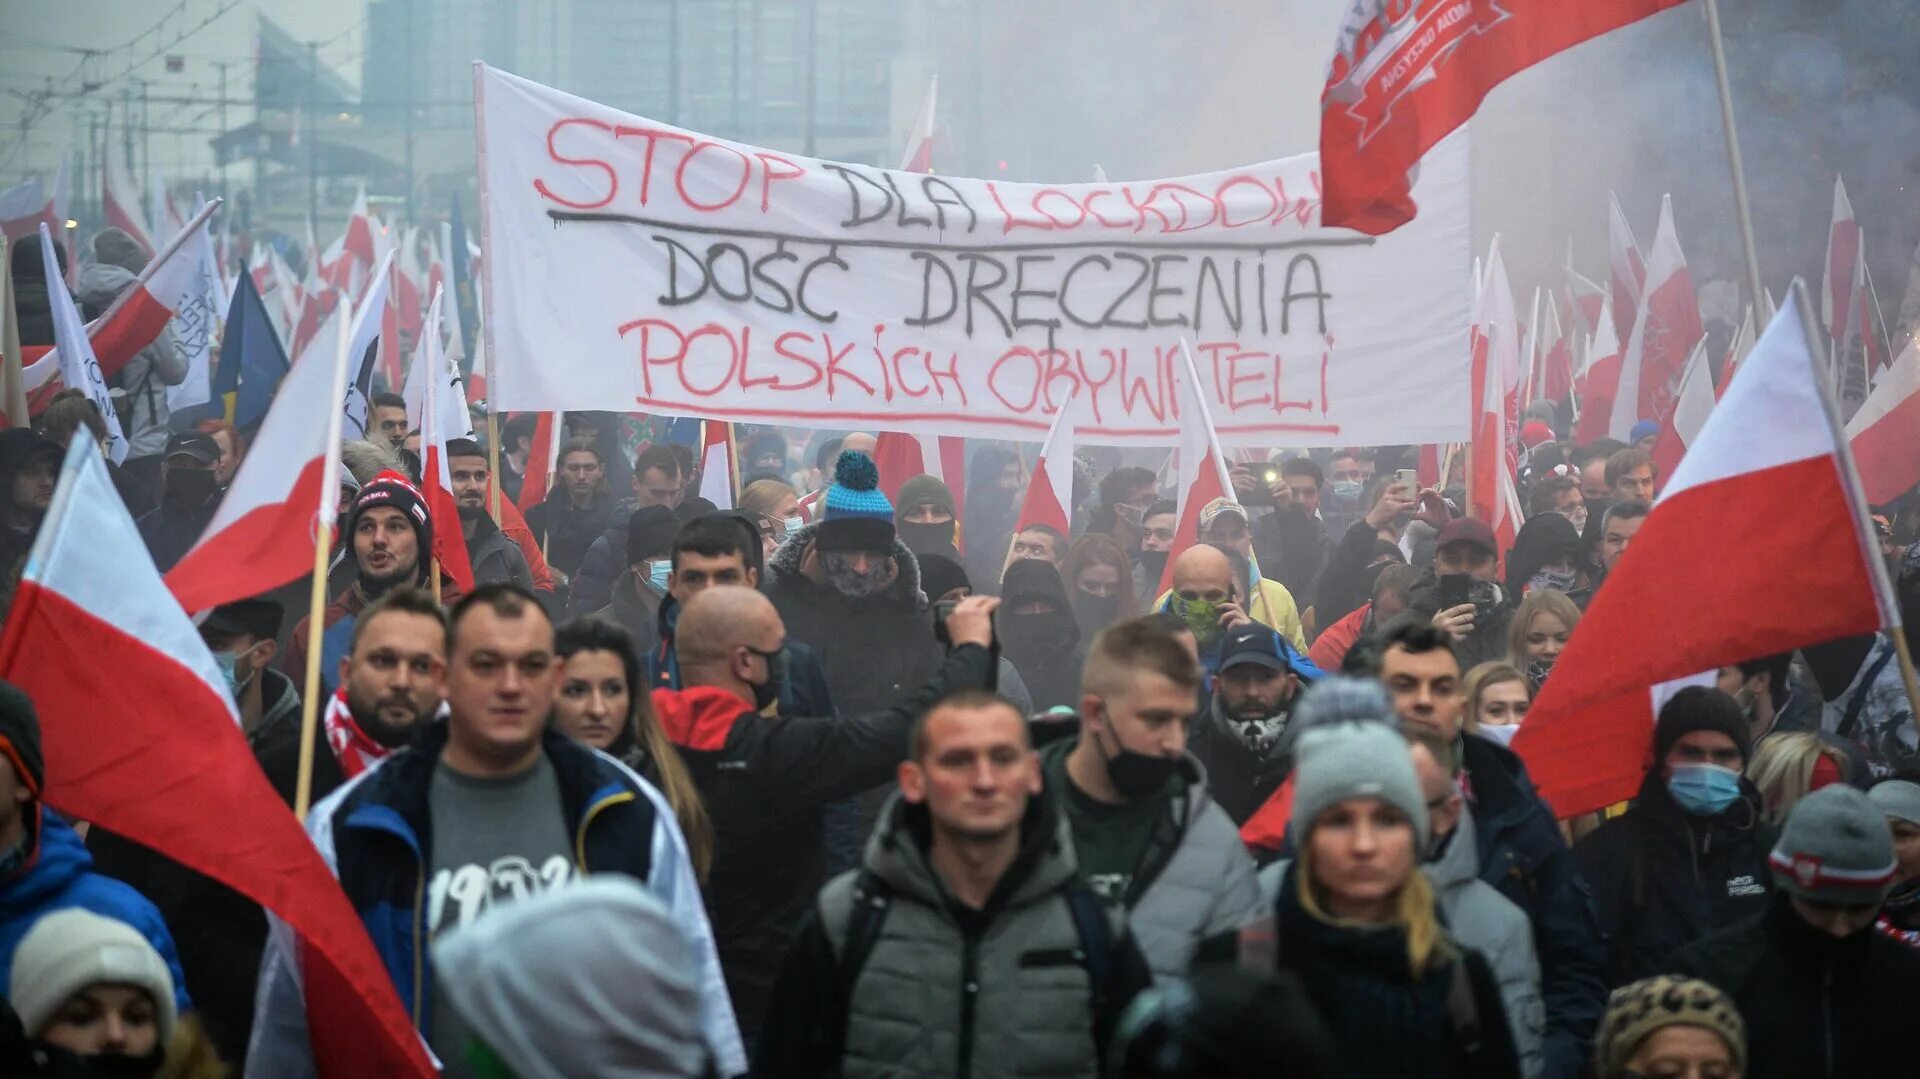 РАПОЛЯКИ националисты. Польский национализм. Польские националисты. Украинские националистические организации.